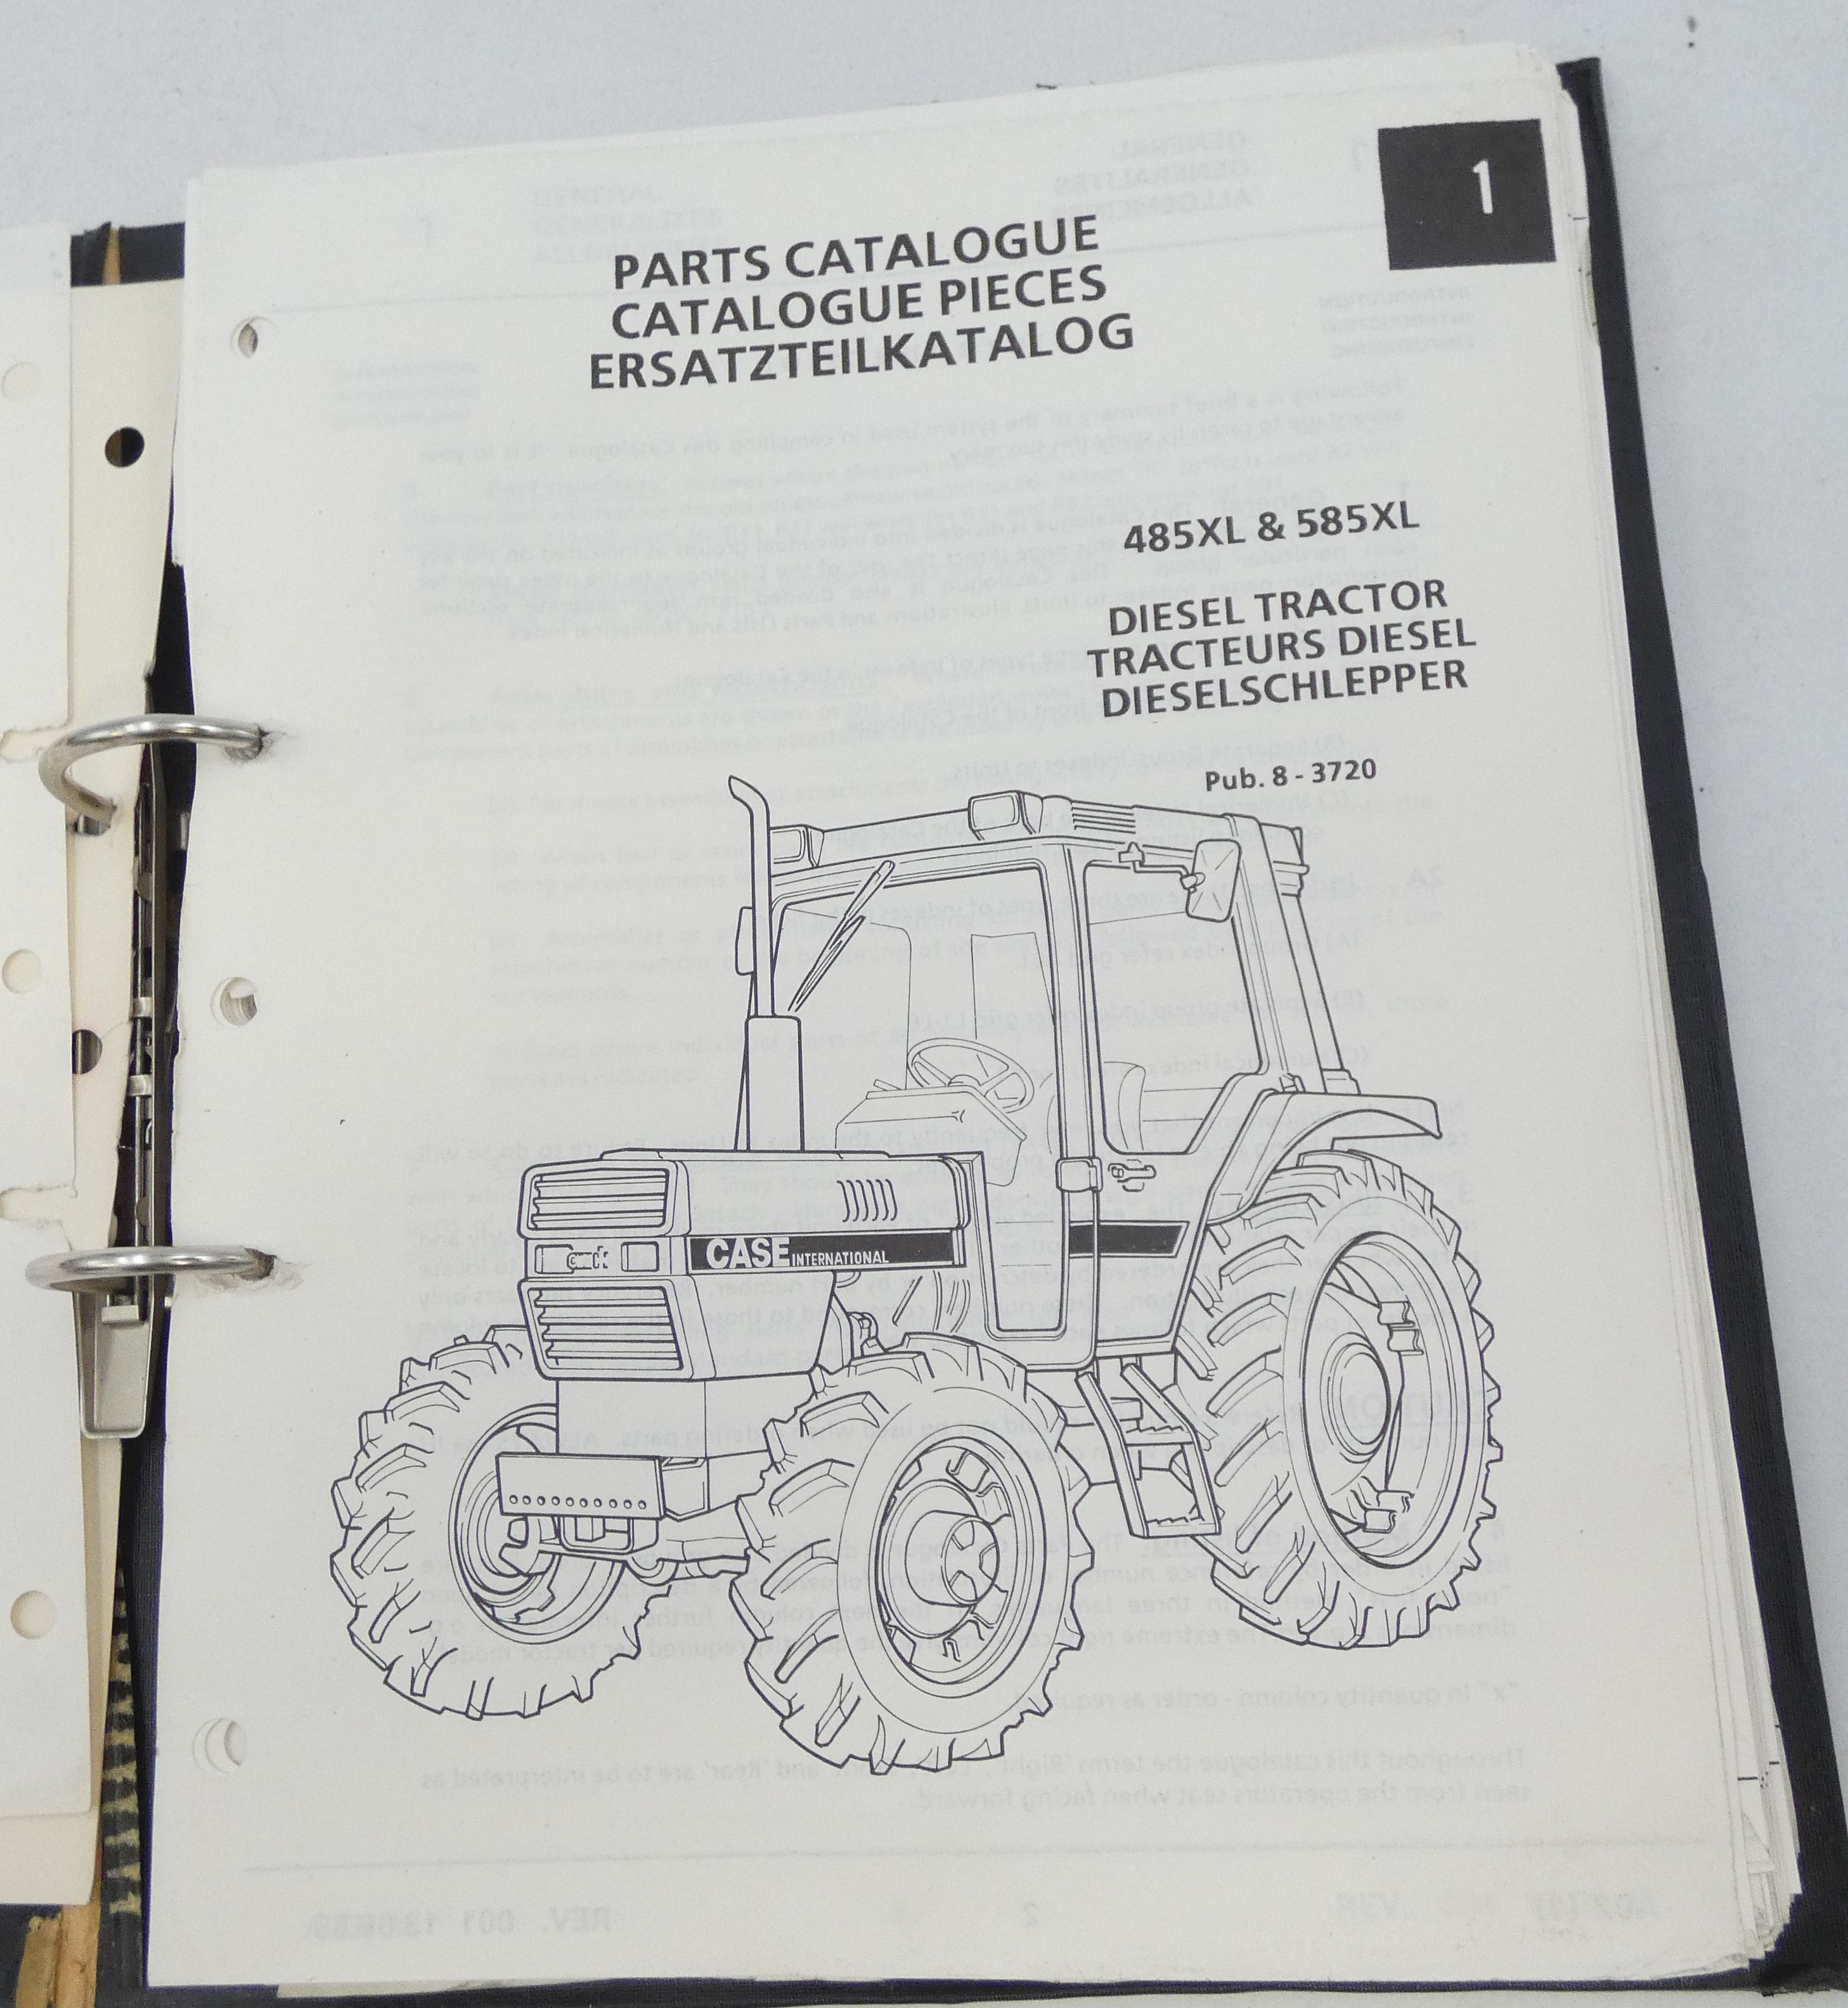 Case international 485XL & 585XL diesel tractor parts catalogue